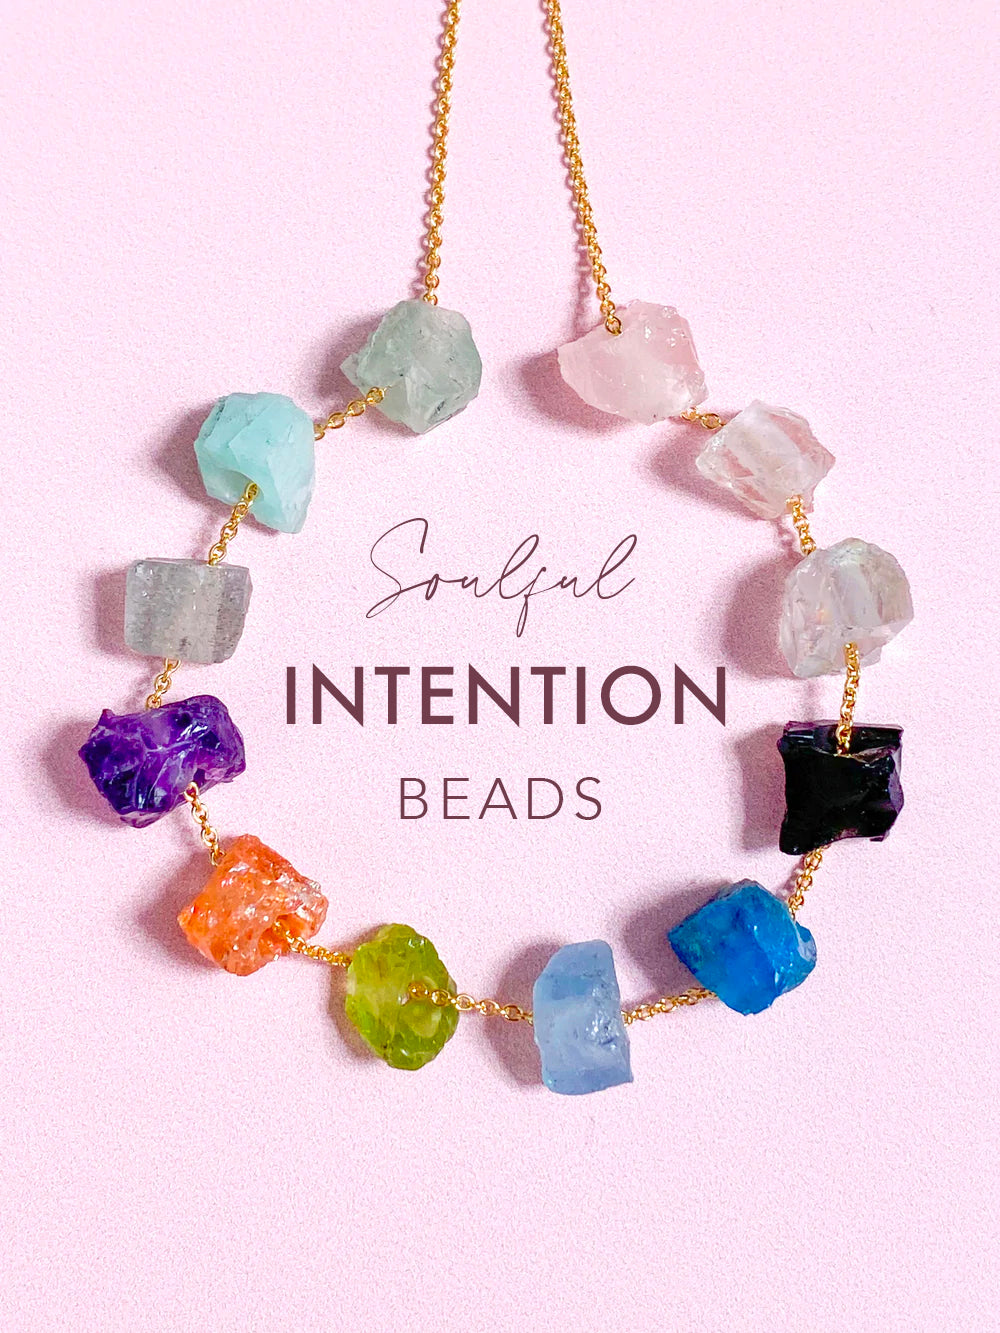 Soulful INTENTION Beads